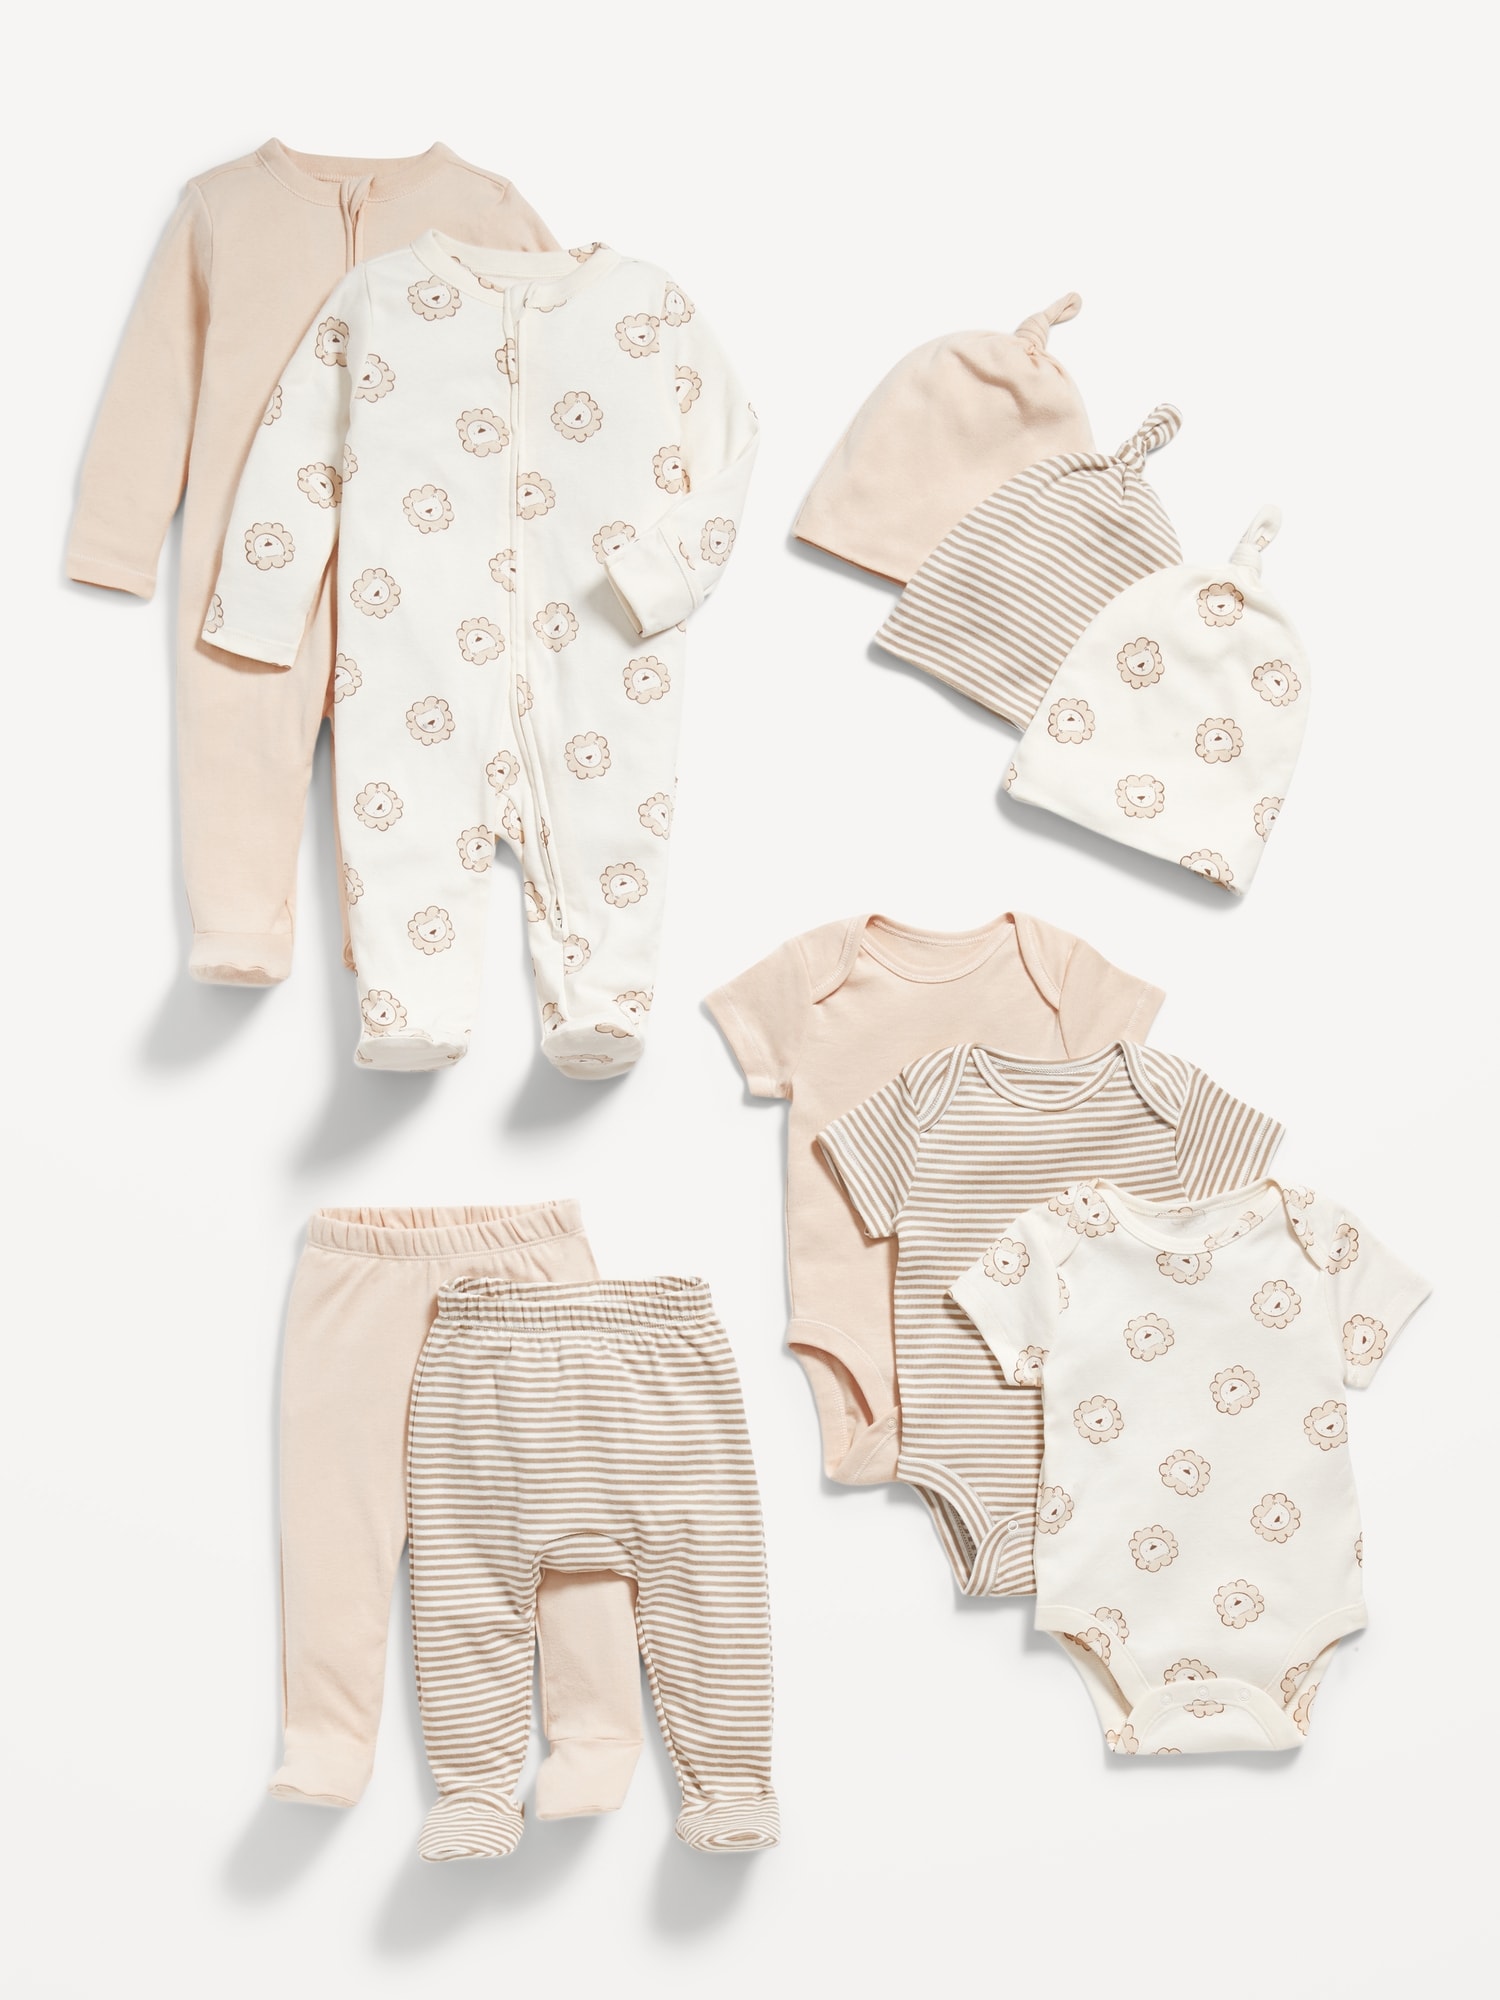  Baby Clothing - Miyanuby / Baby Clothing / Baby